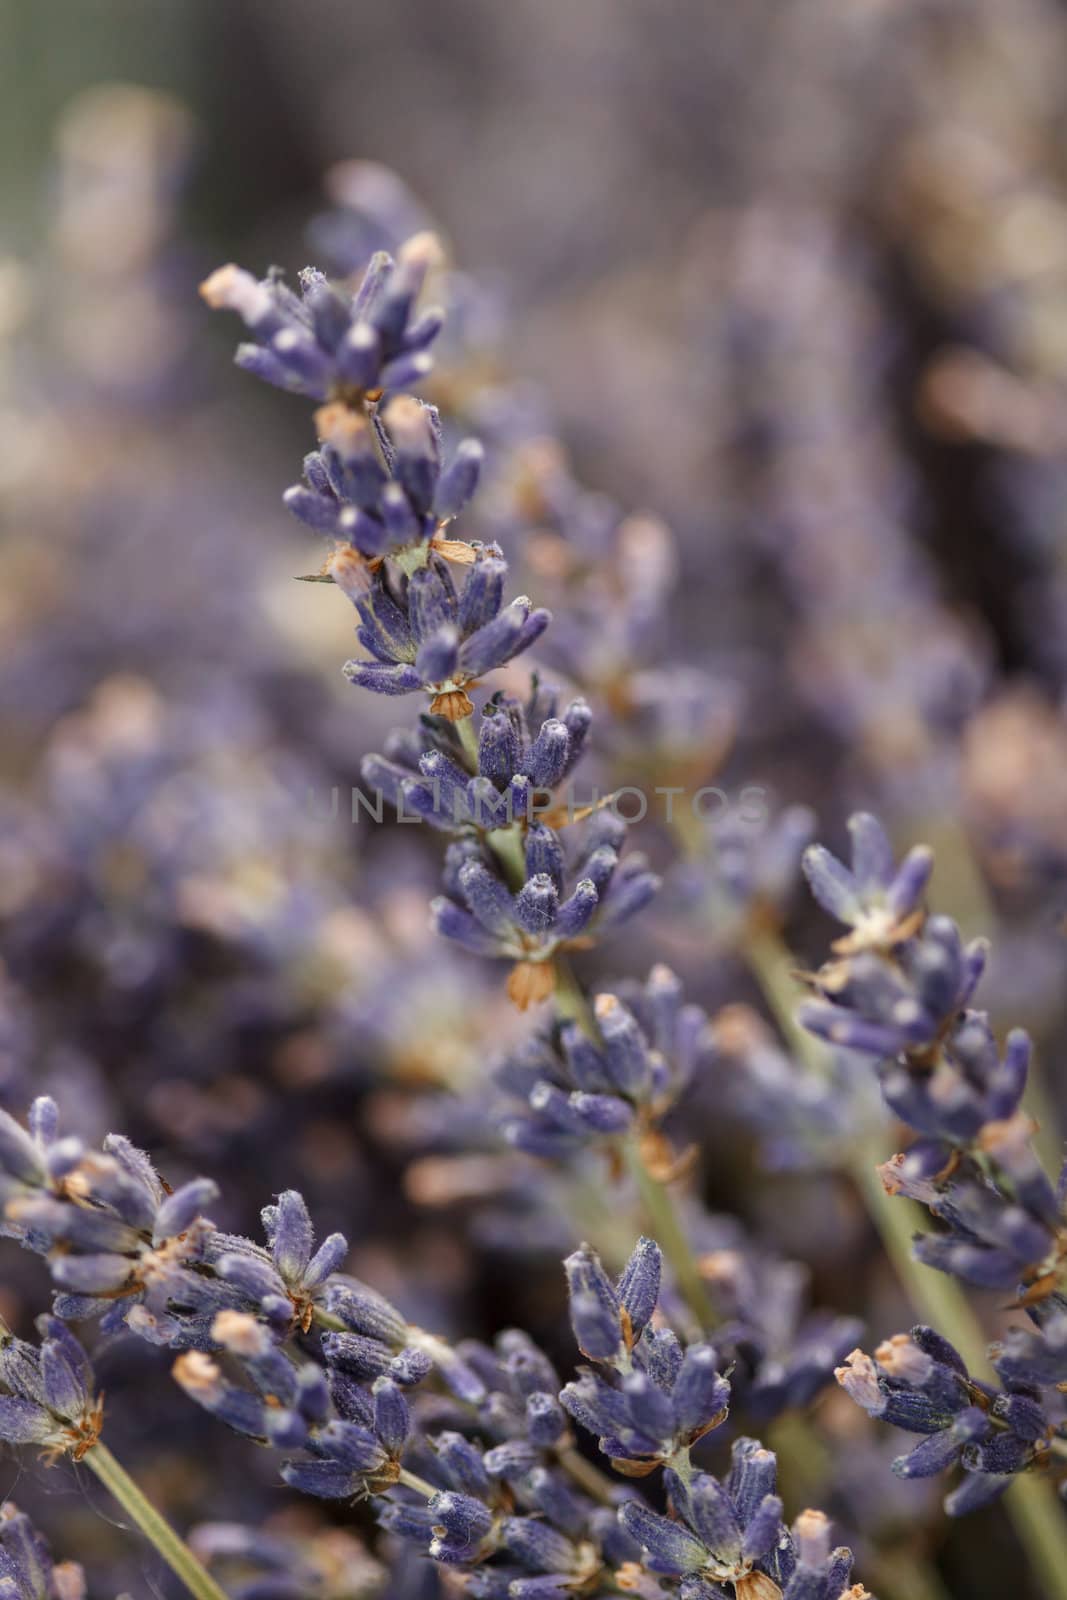 Dried lavender flowers